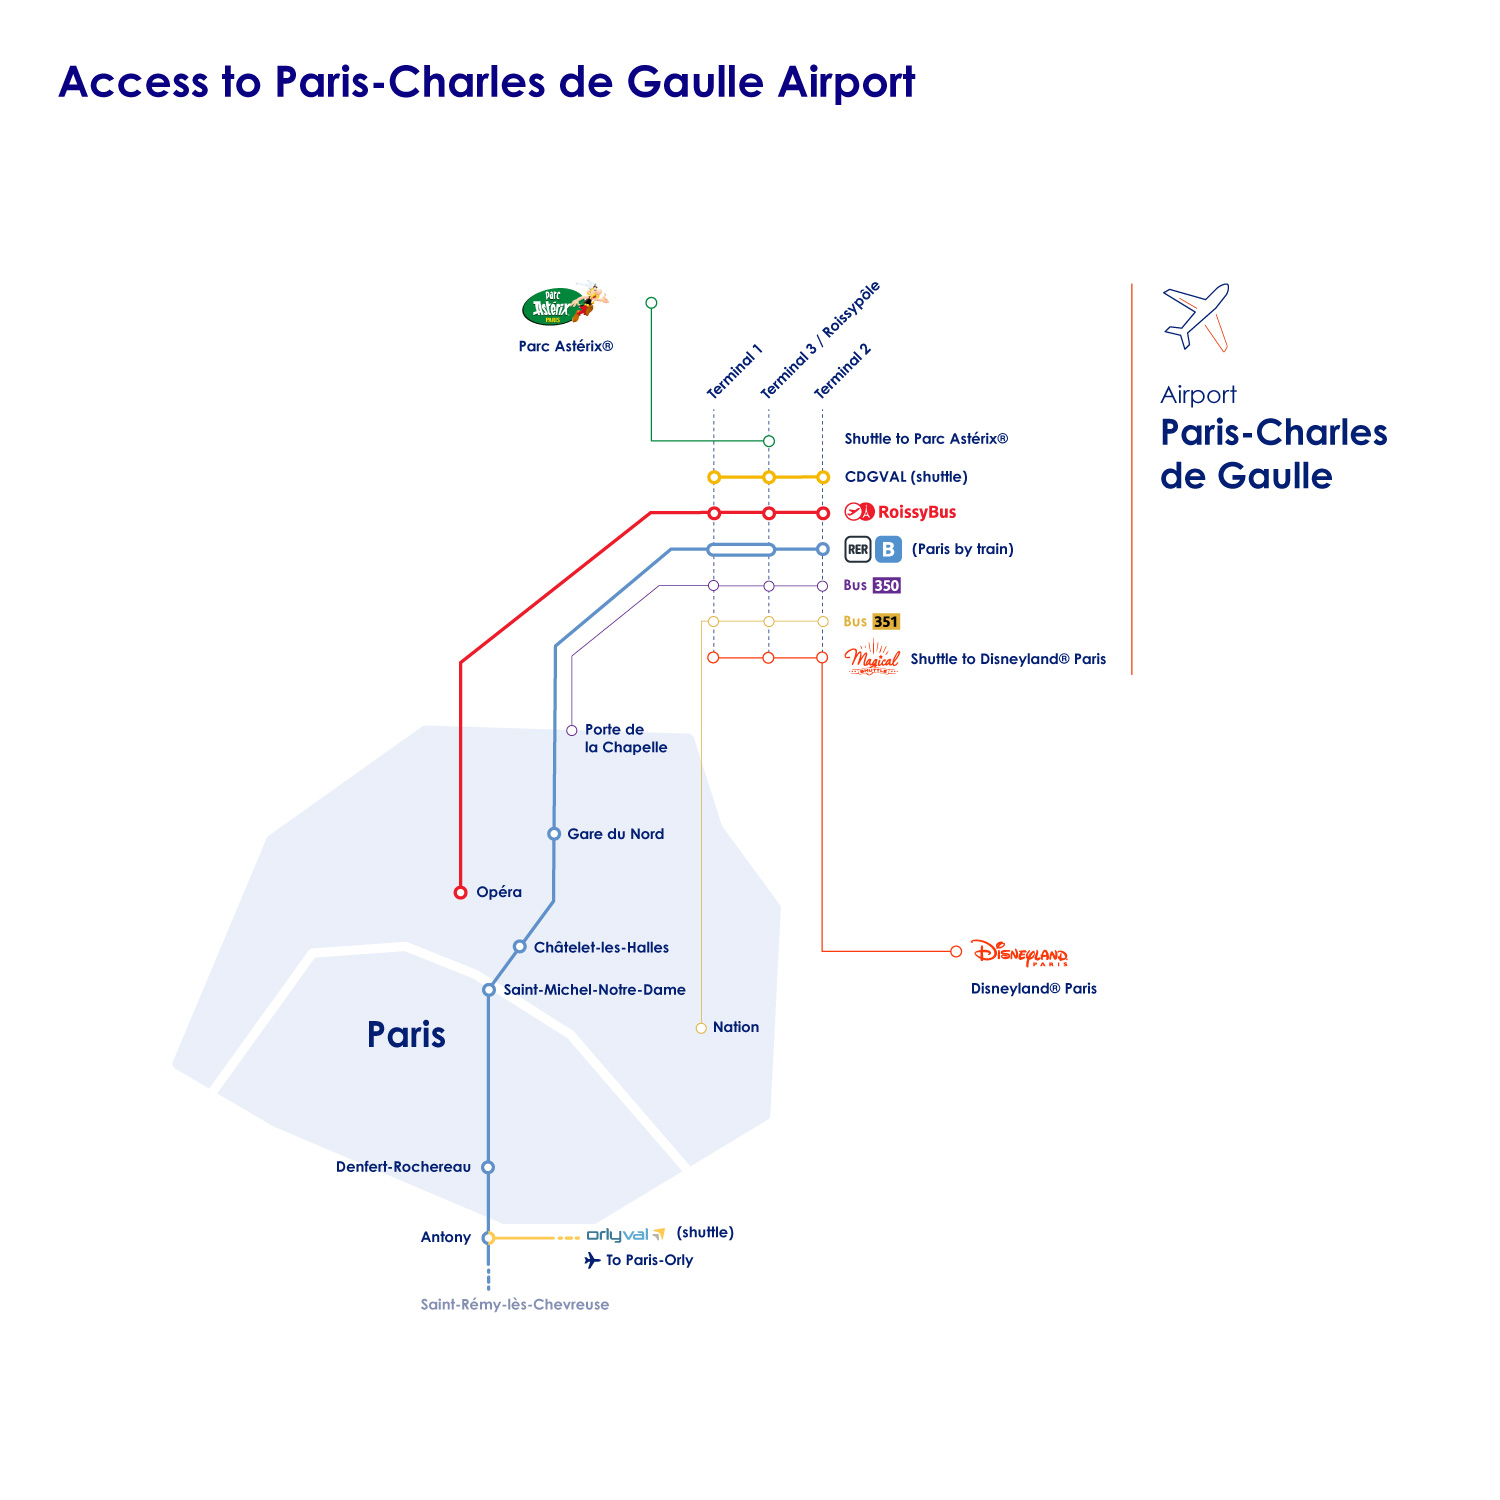 Connecting Through Paris Charles de Gaulle Airport (CDG